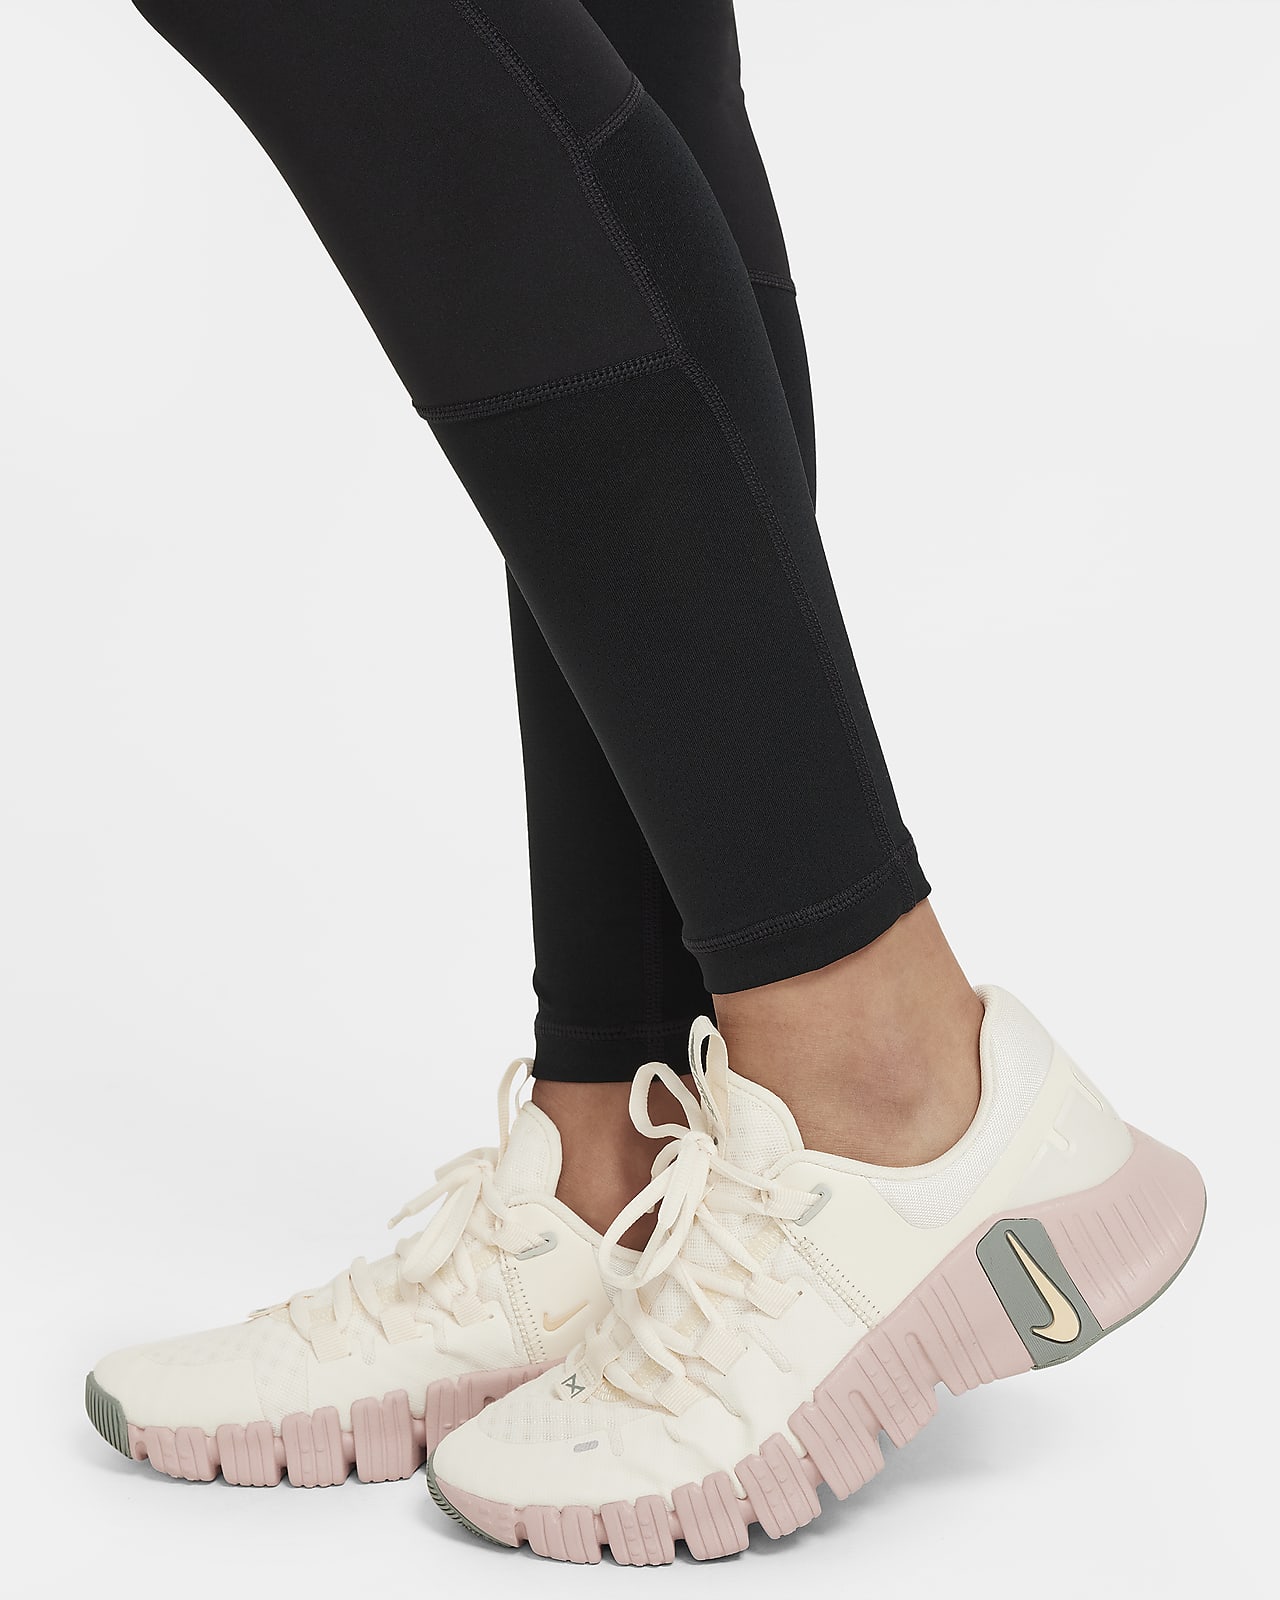 Buy Girls' Leggings Nike Online